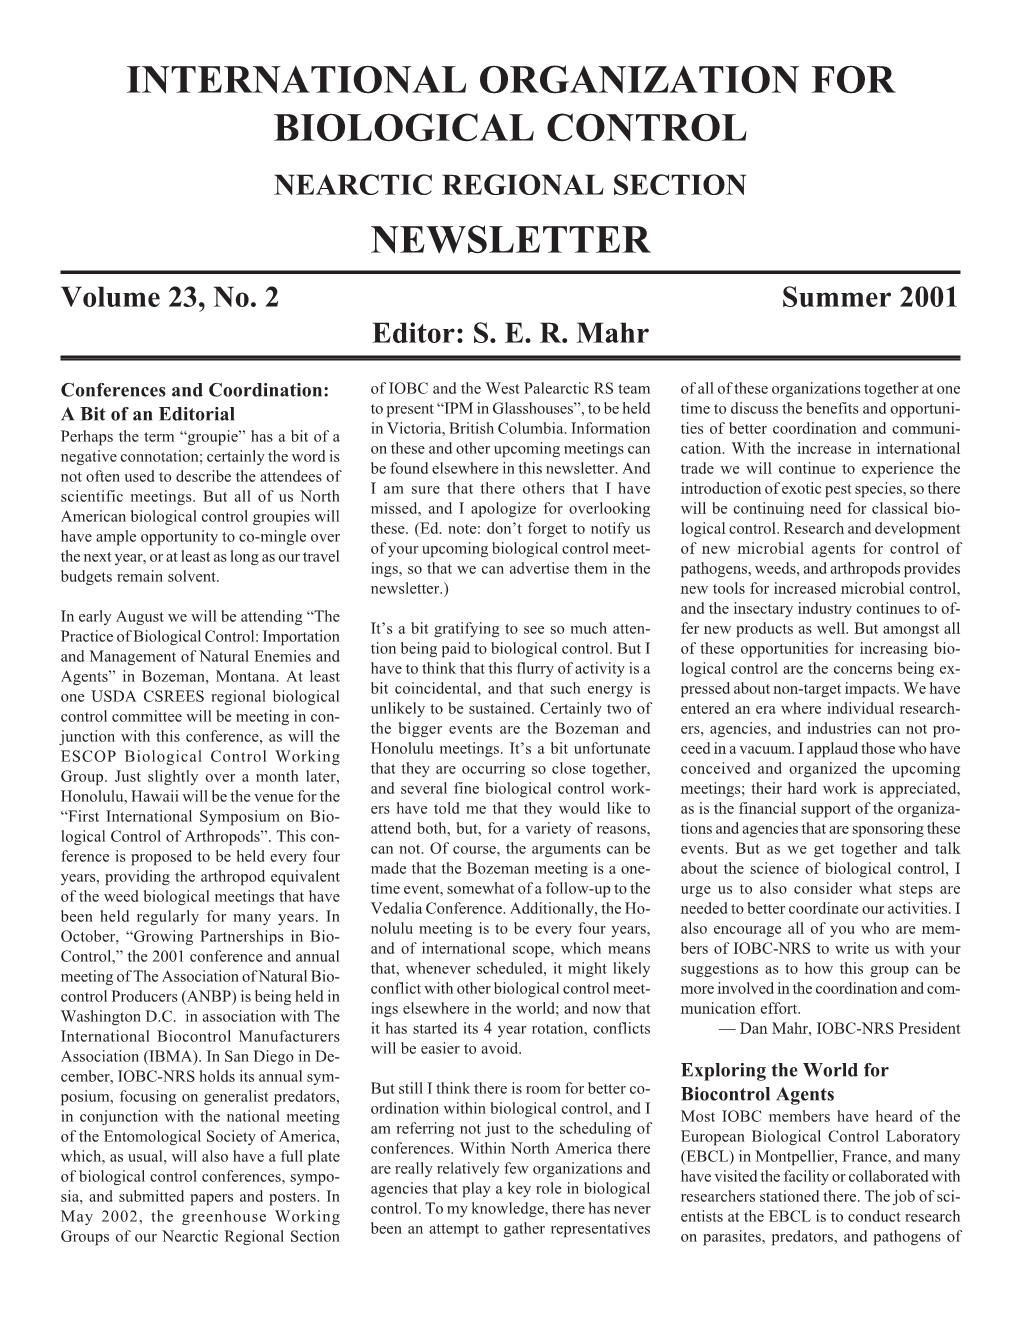 INTERNATIONAL ORGANIZATION for BIOLOGICAL CONTROL NEARCTIC REGIONAL SECTION NEWSLETTER Volume 23, No